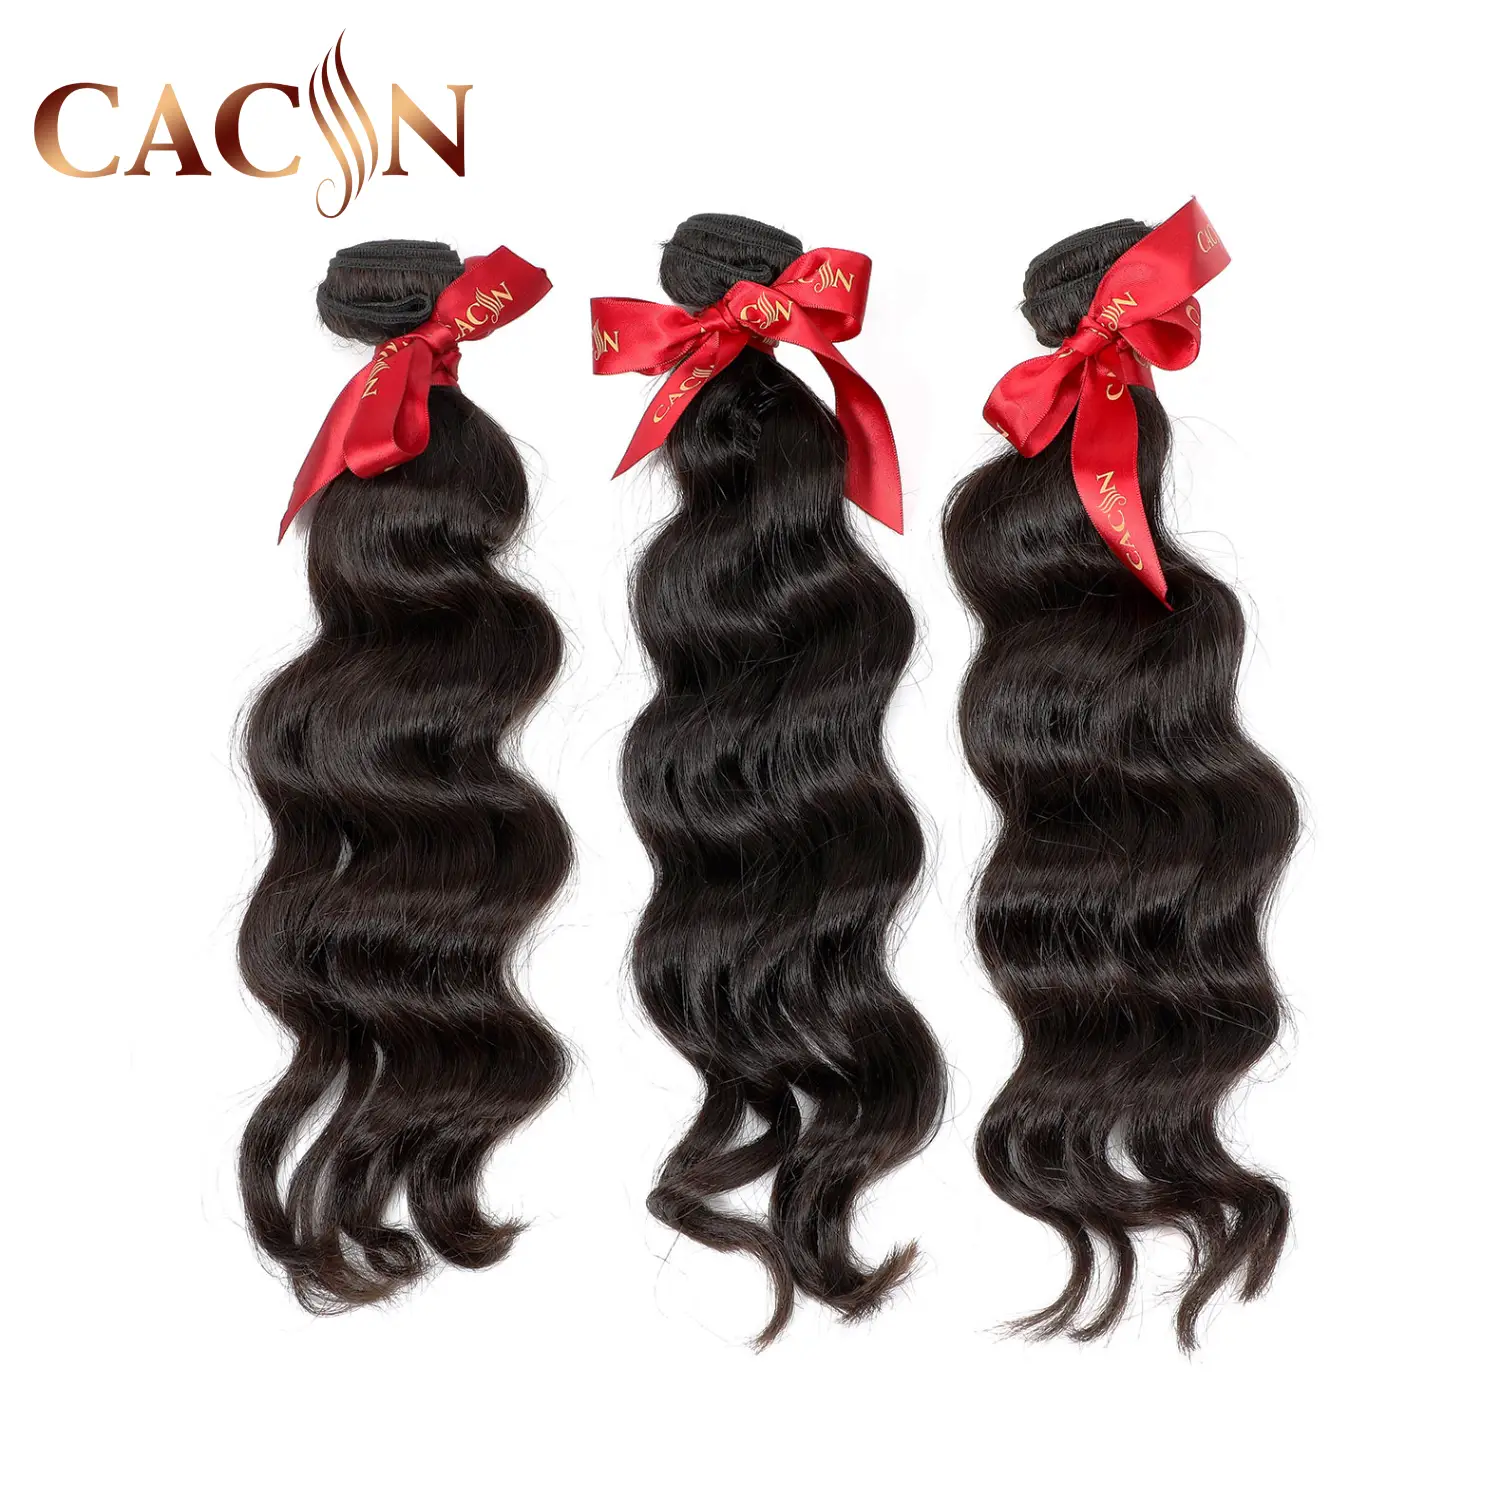 Raw virgin Malaysian hair bundles natural wave 3 & 4 bundle deals, raw virgin human hair weave, free shipping